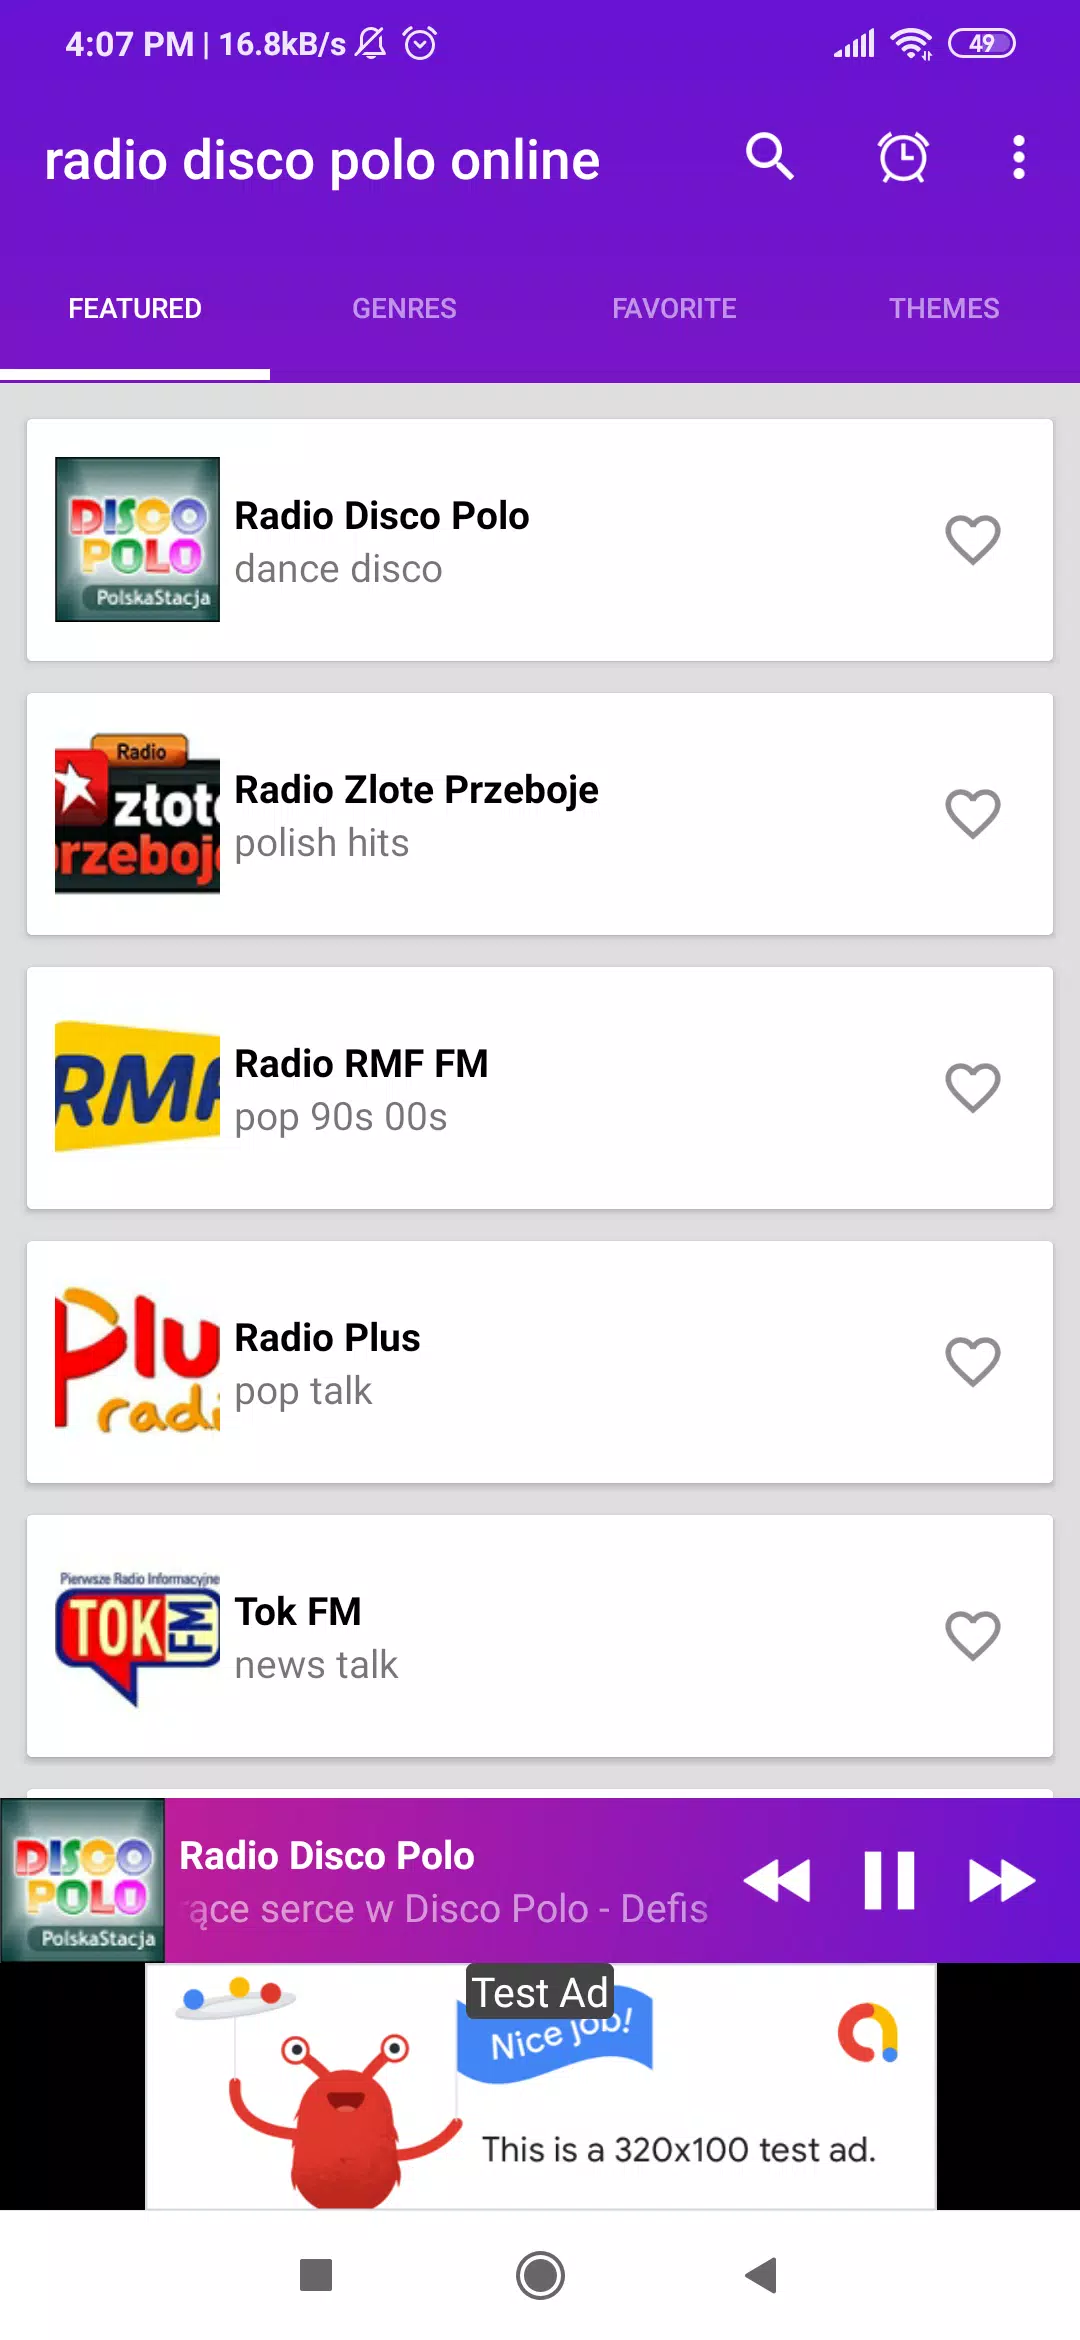 radio disco polo online APK do pobrania na Androida